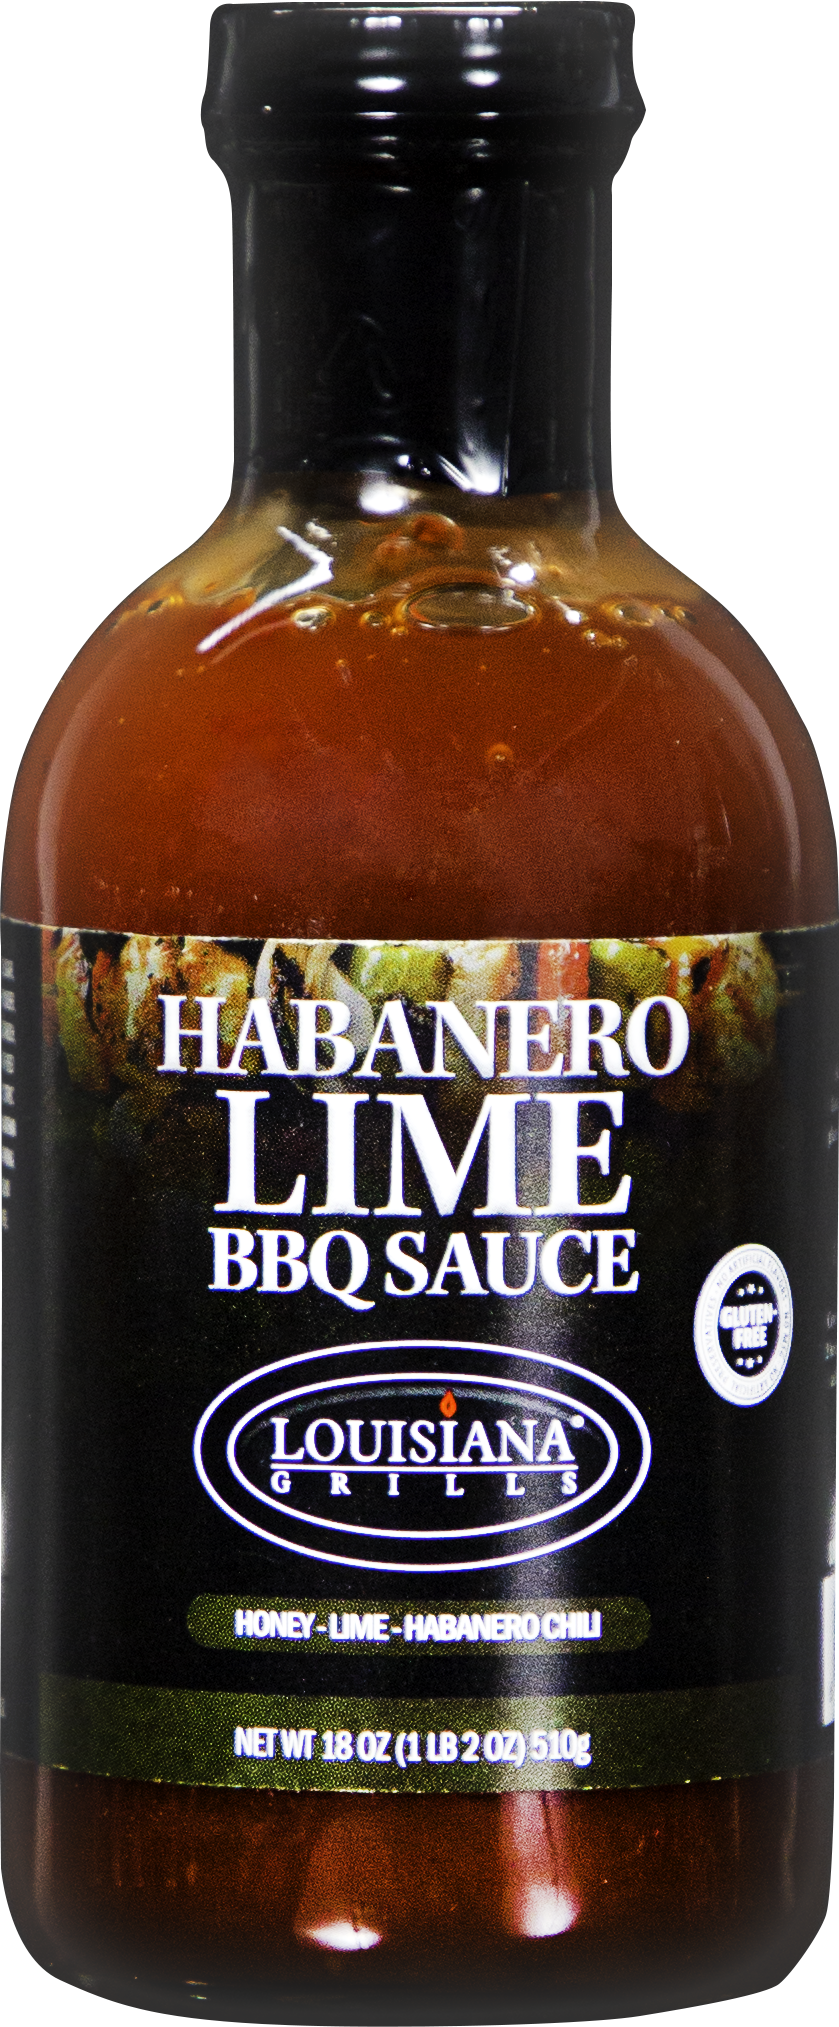 Louisiana Grills LG Habanero Lime BBQ Sauce/Glaze